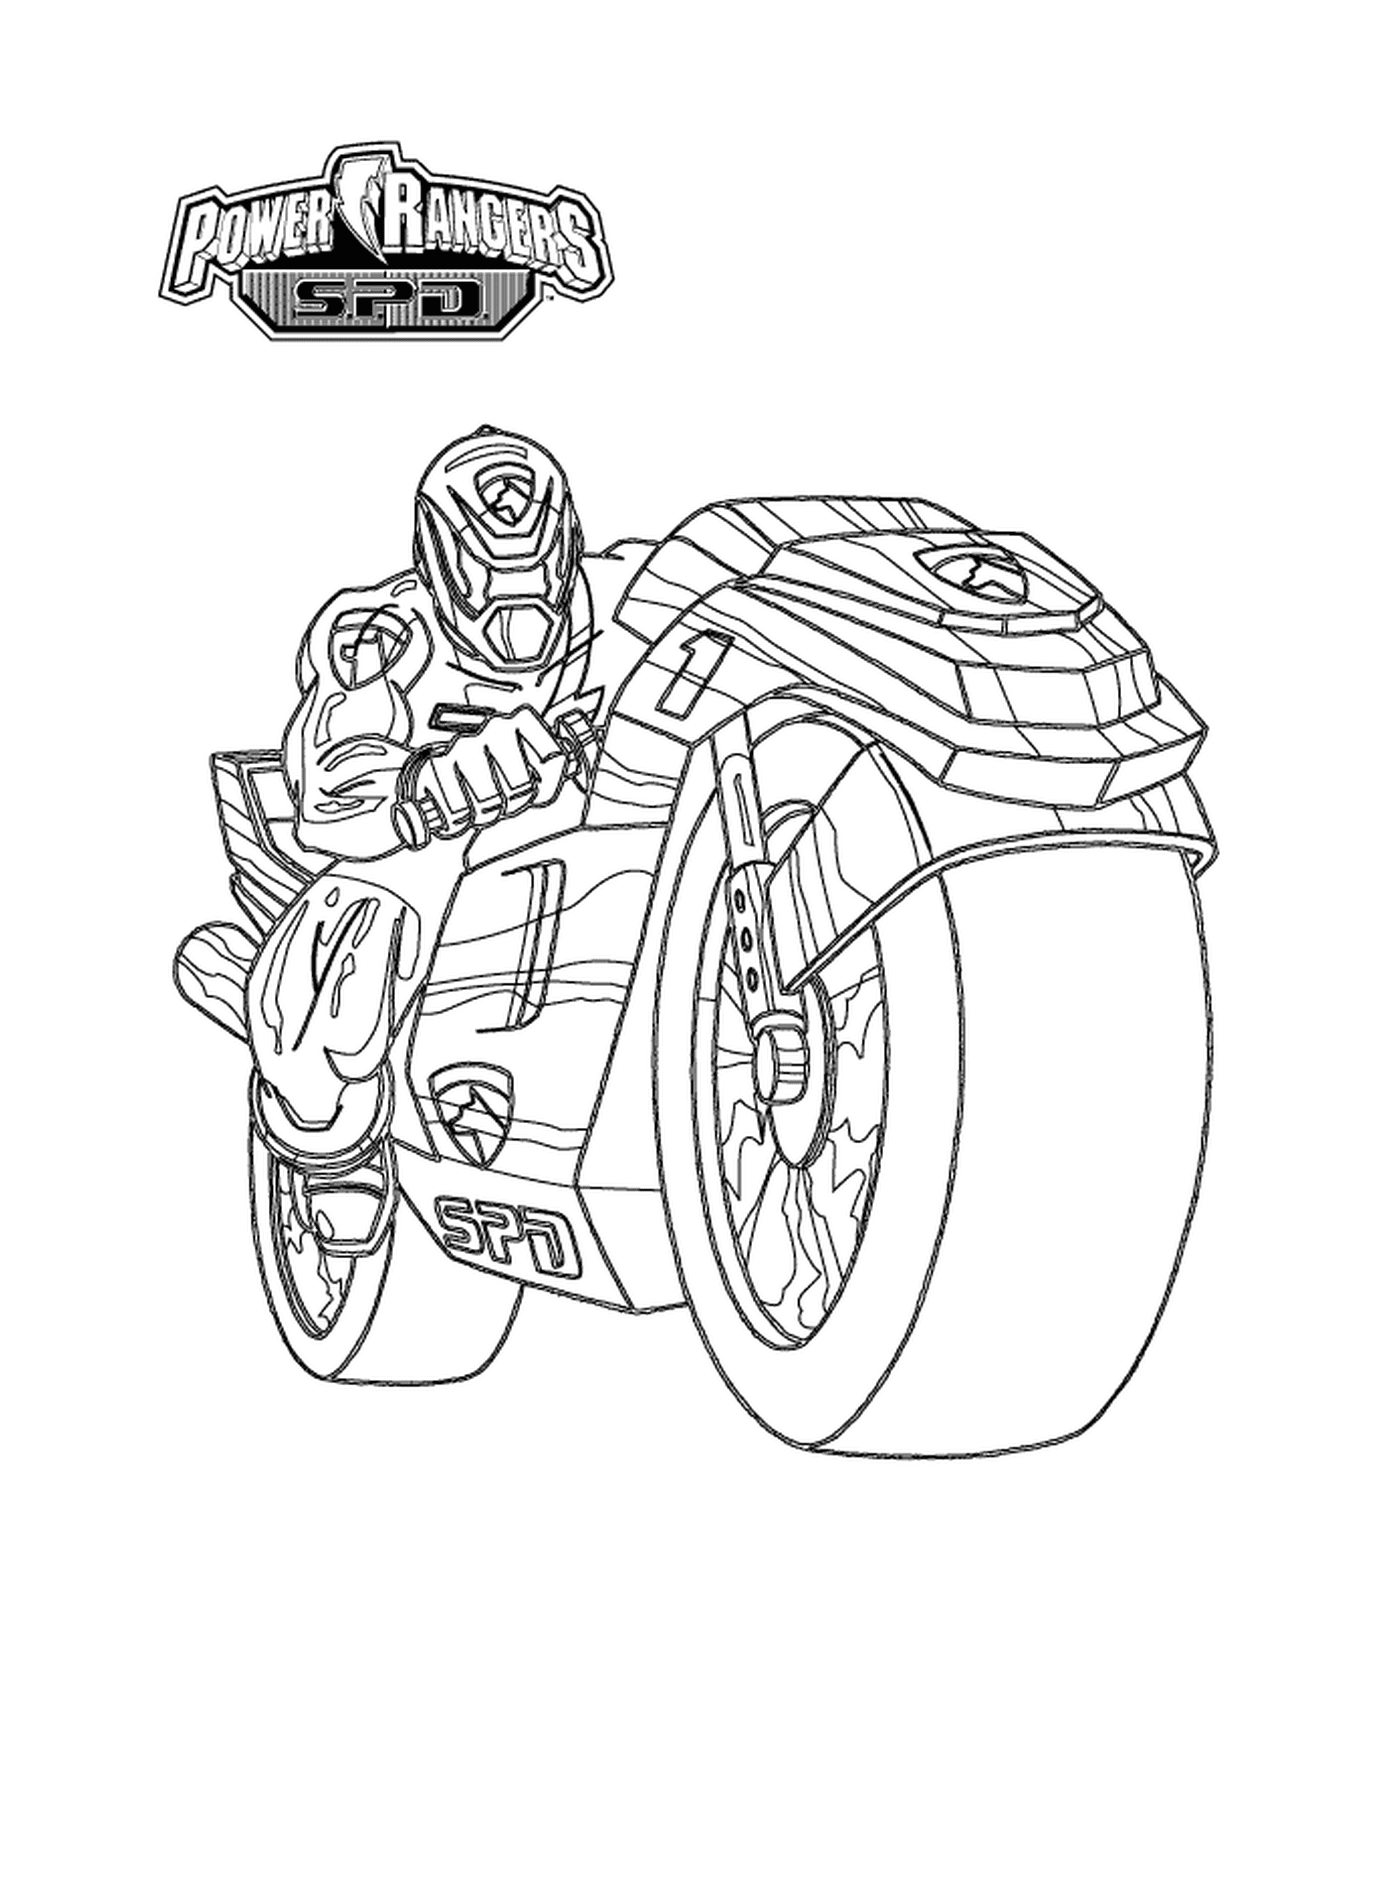   Motard des Power Rangers à moto 